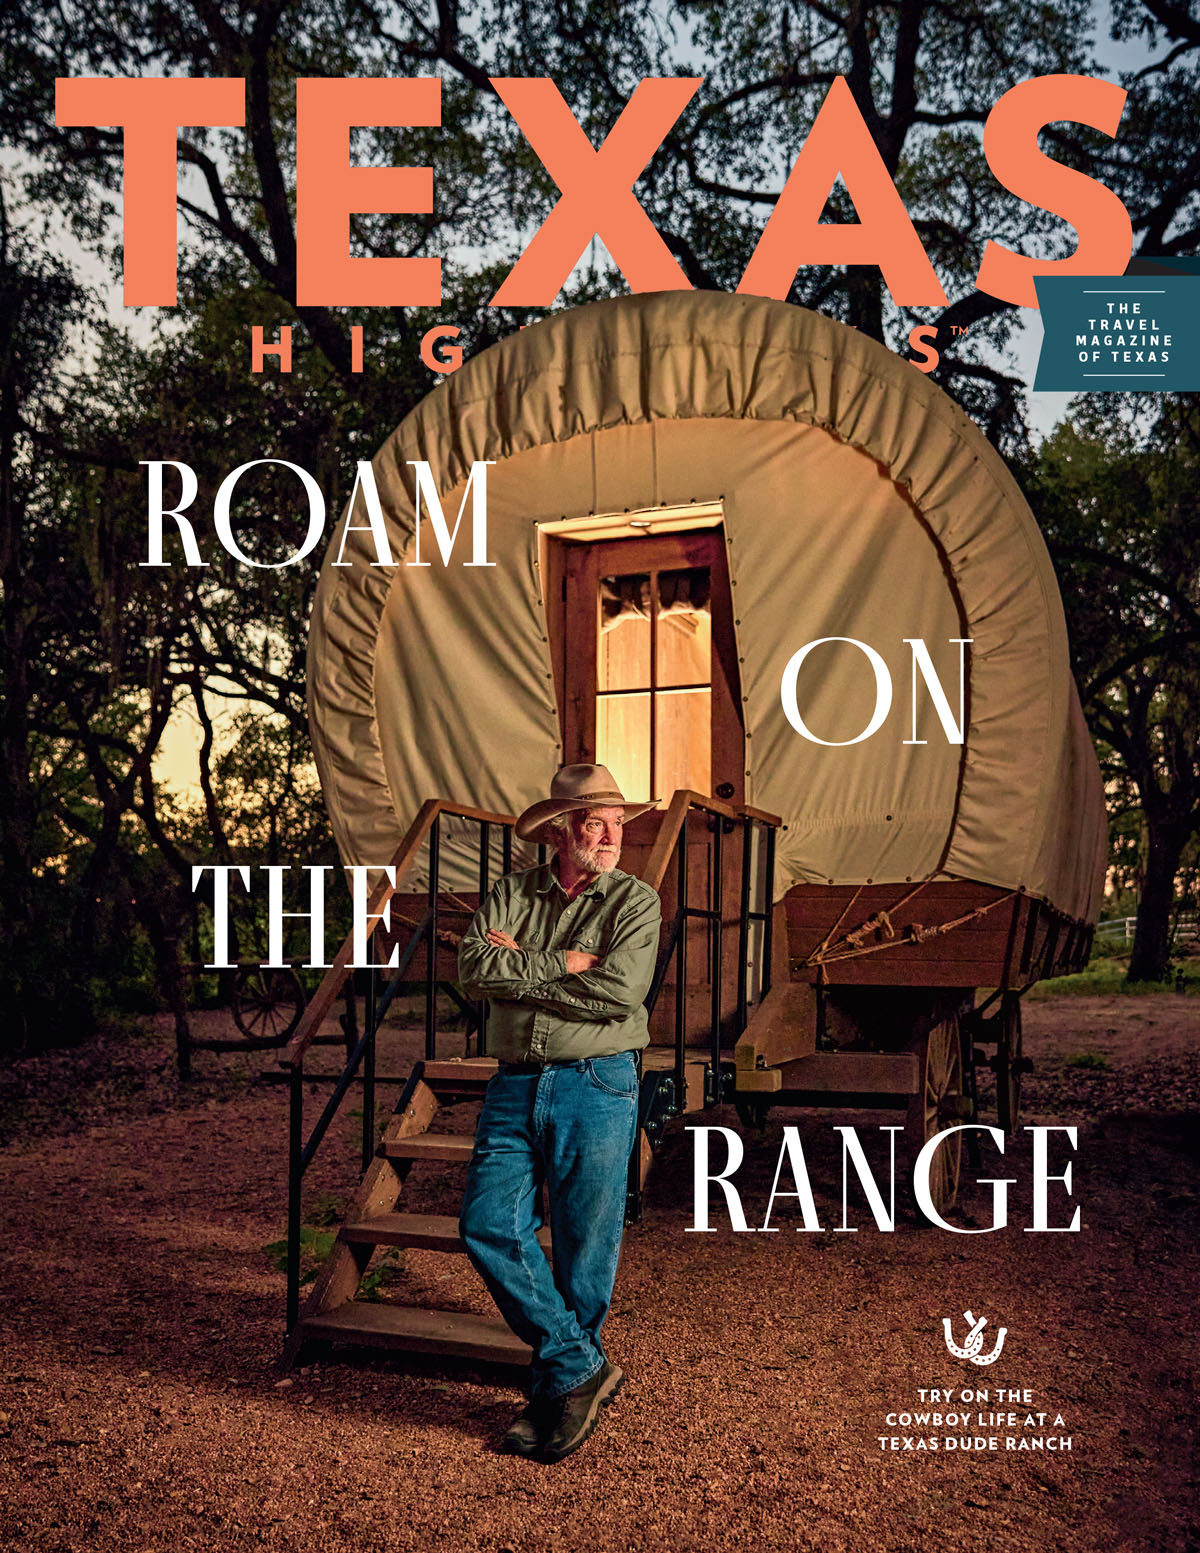 The November 2022 cover of Texas Highways Magazine